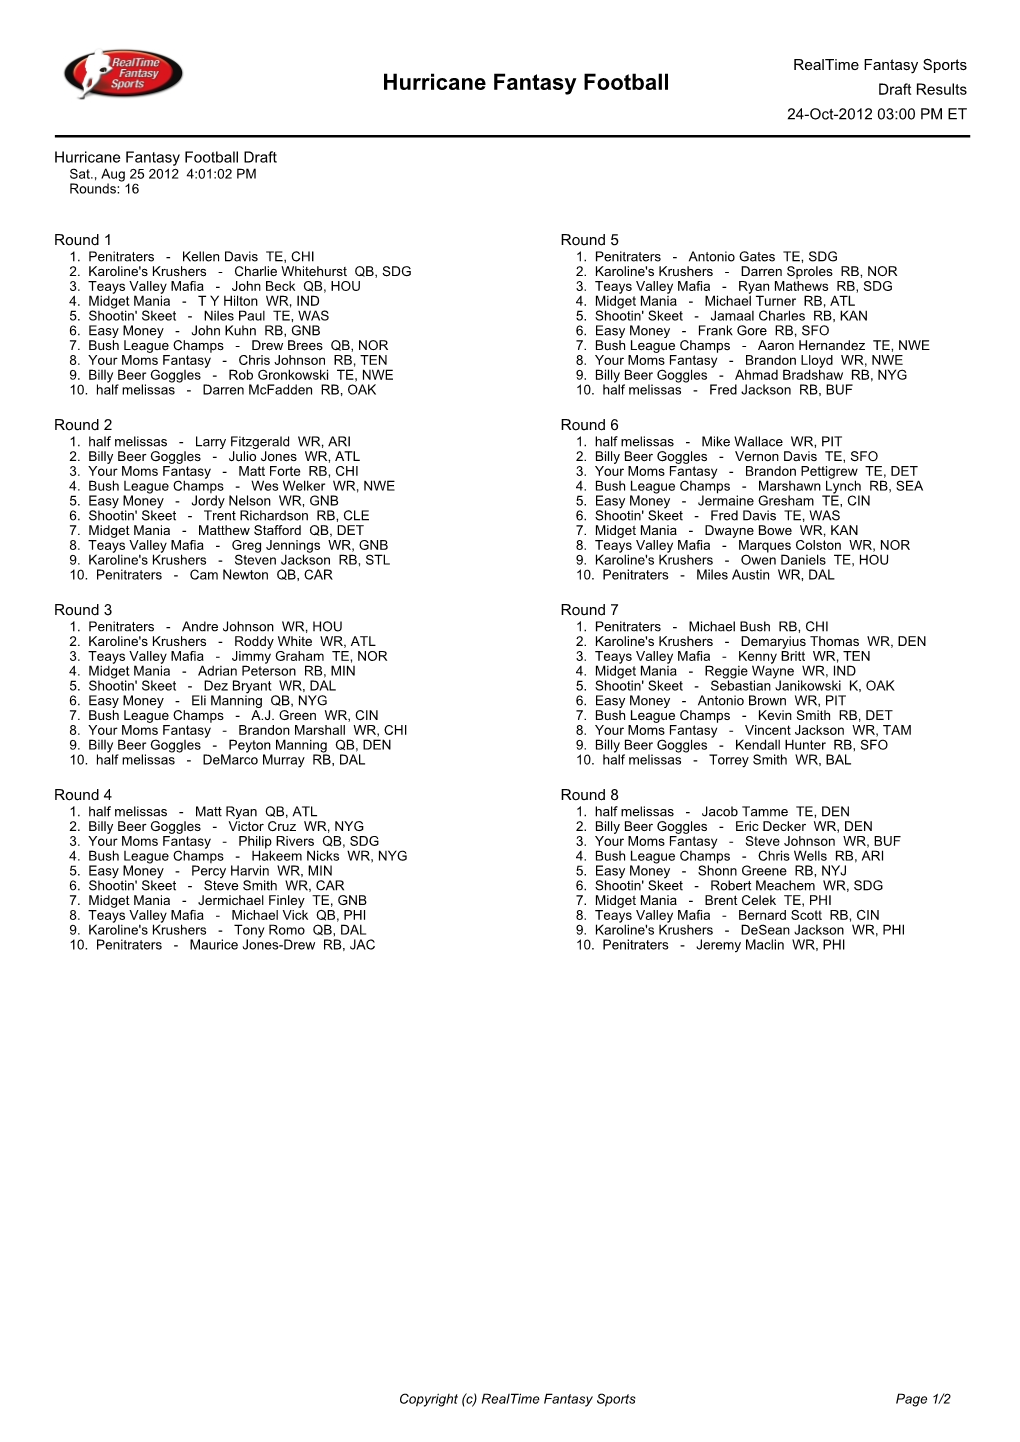 Hurricane Fantasy Football Draft Results 24-Oct-2012 03:00 PM ET